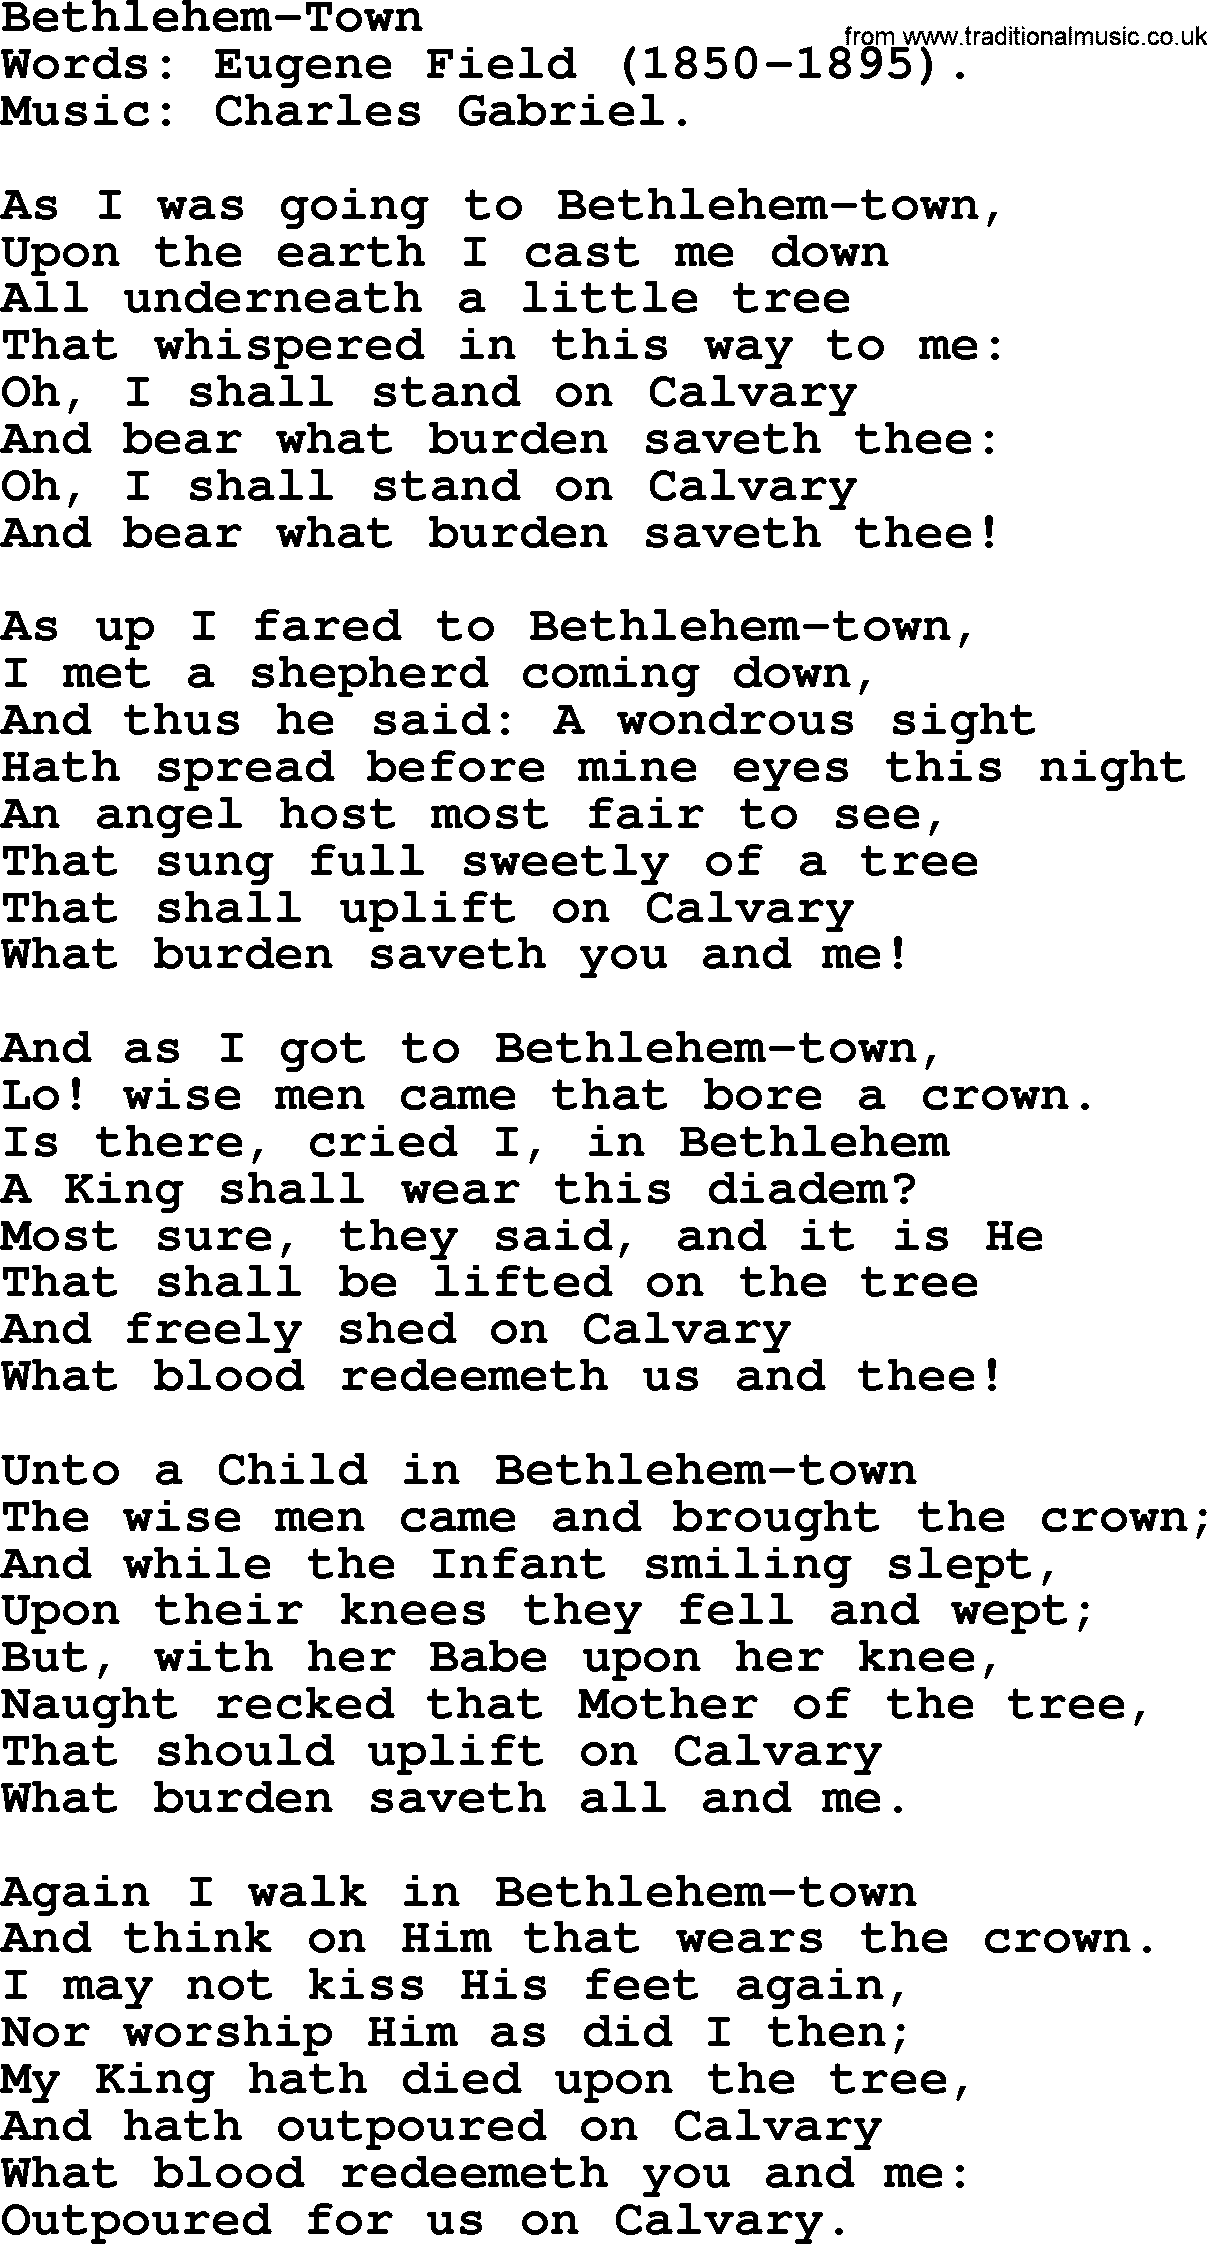 Christmas Hymns, Carols and Songs, title: Bethlehem-town, lyrics with PDF